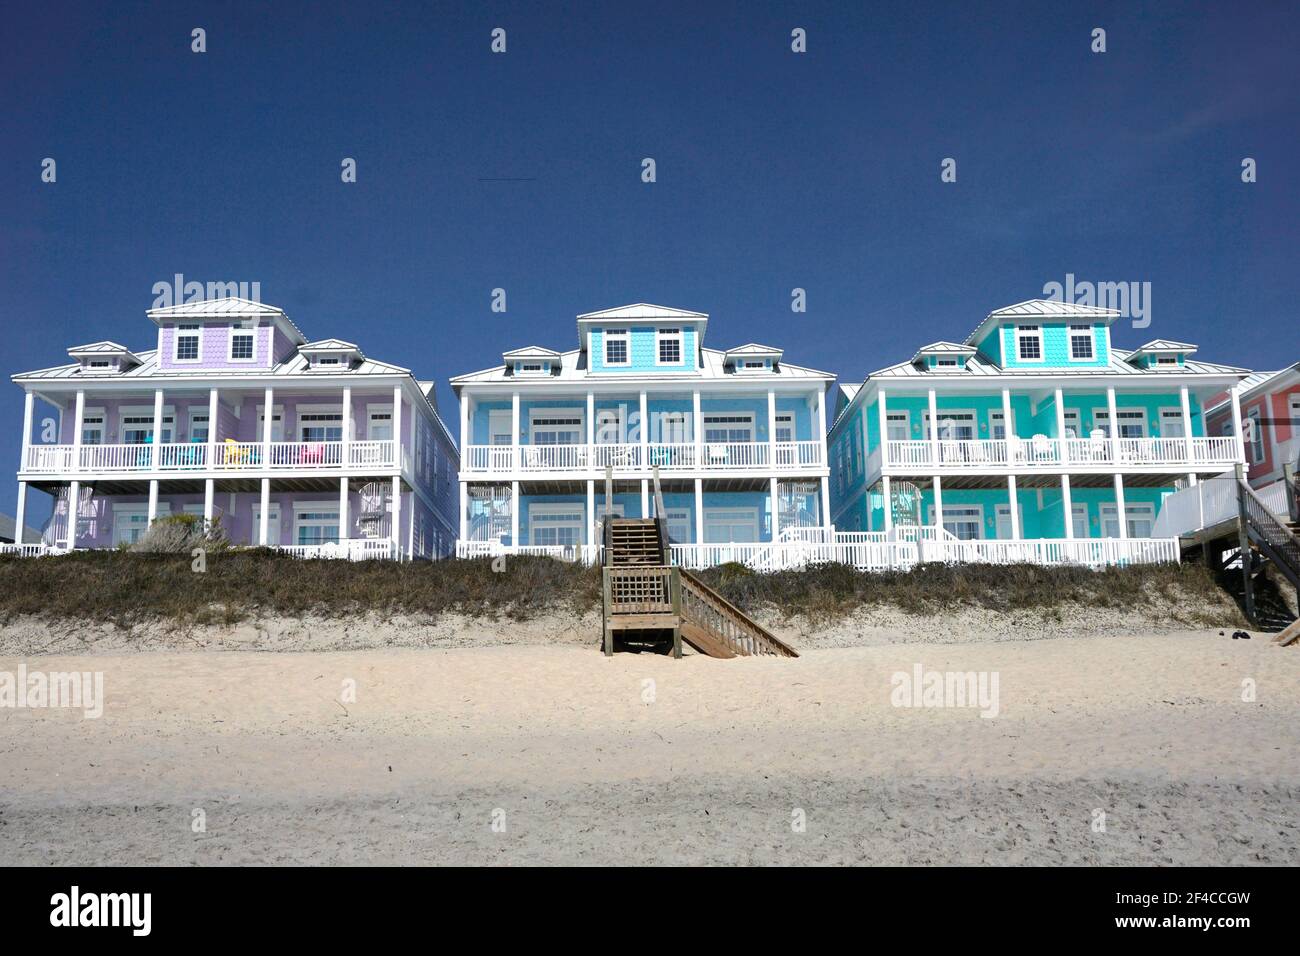 Row of multicolored houses on a sandy beach Stock Photo